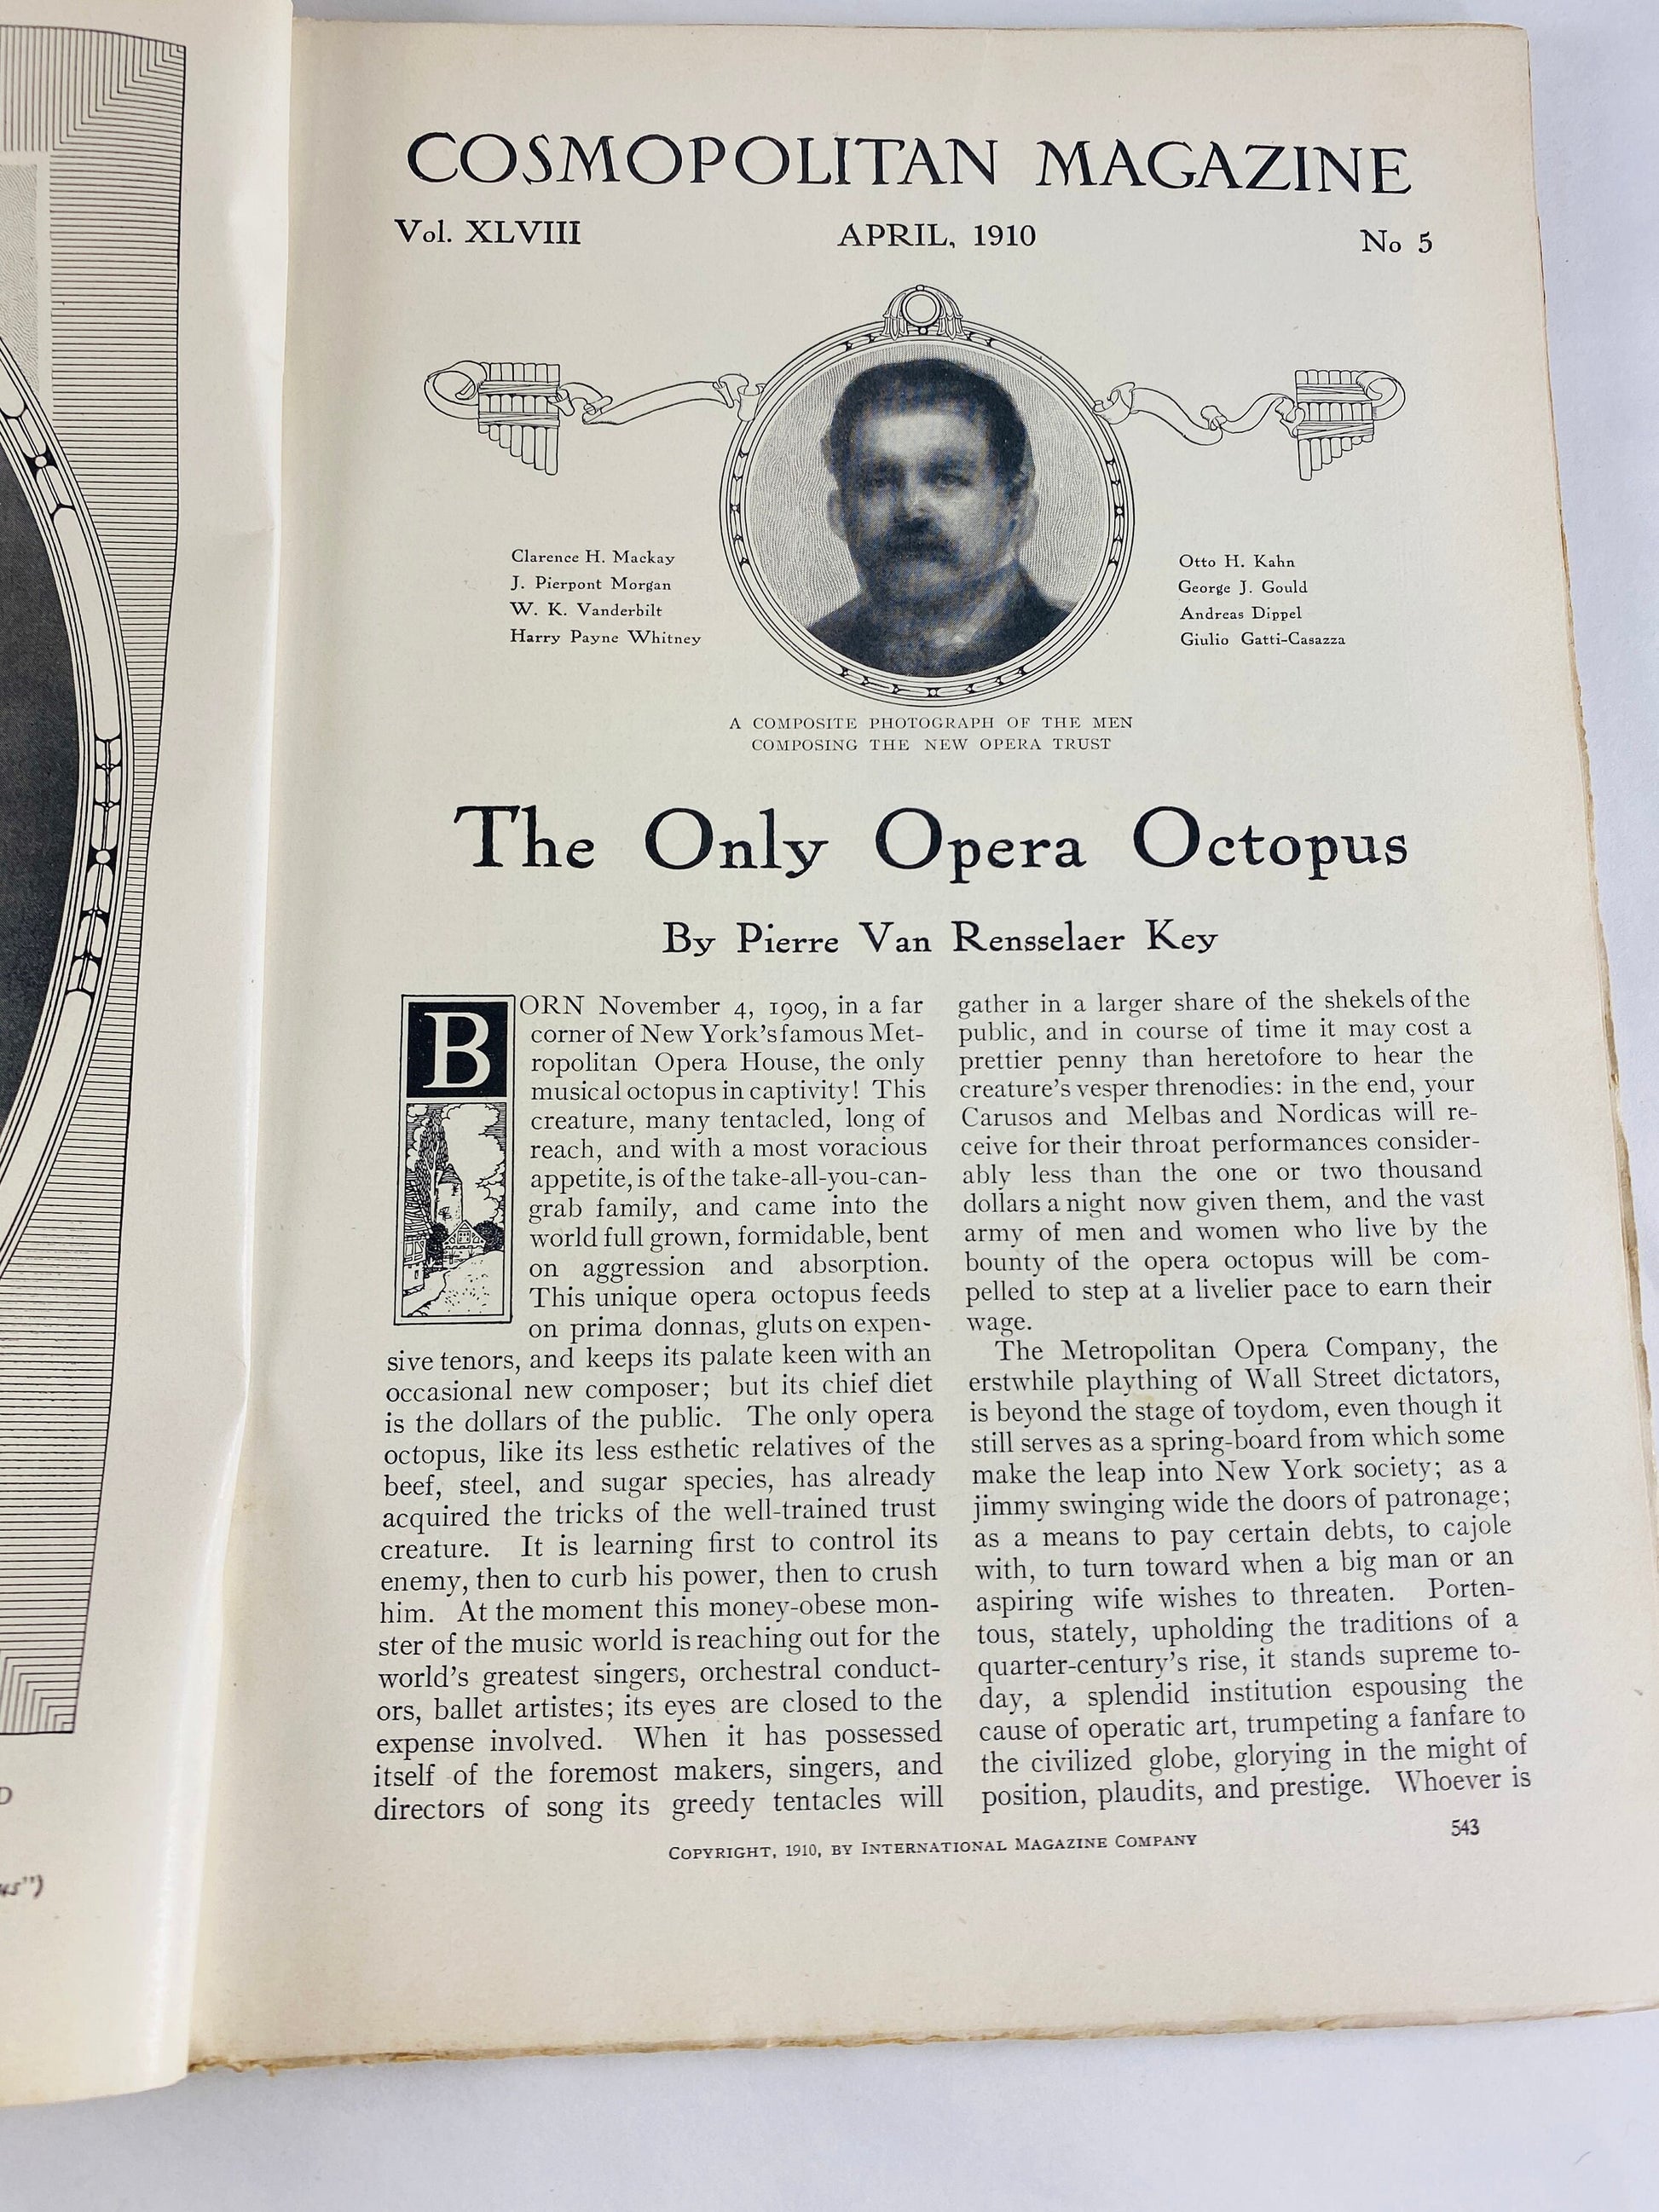 1910 vintage Cosmopolitan Magazine Vol 48 No 5 featuring Only Opera Octopus by Pierre Van Rensselaer Key, Imagination by Charles Ferguson